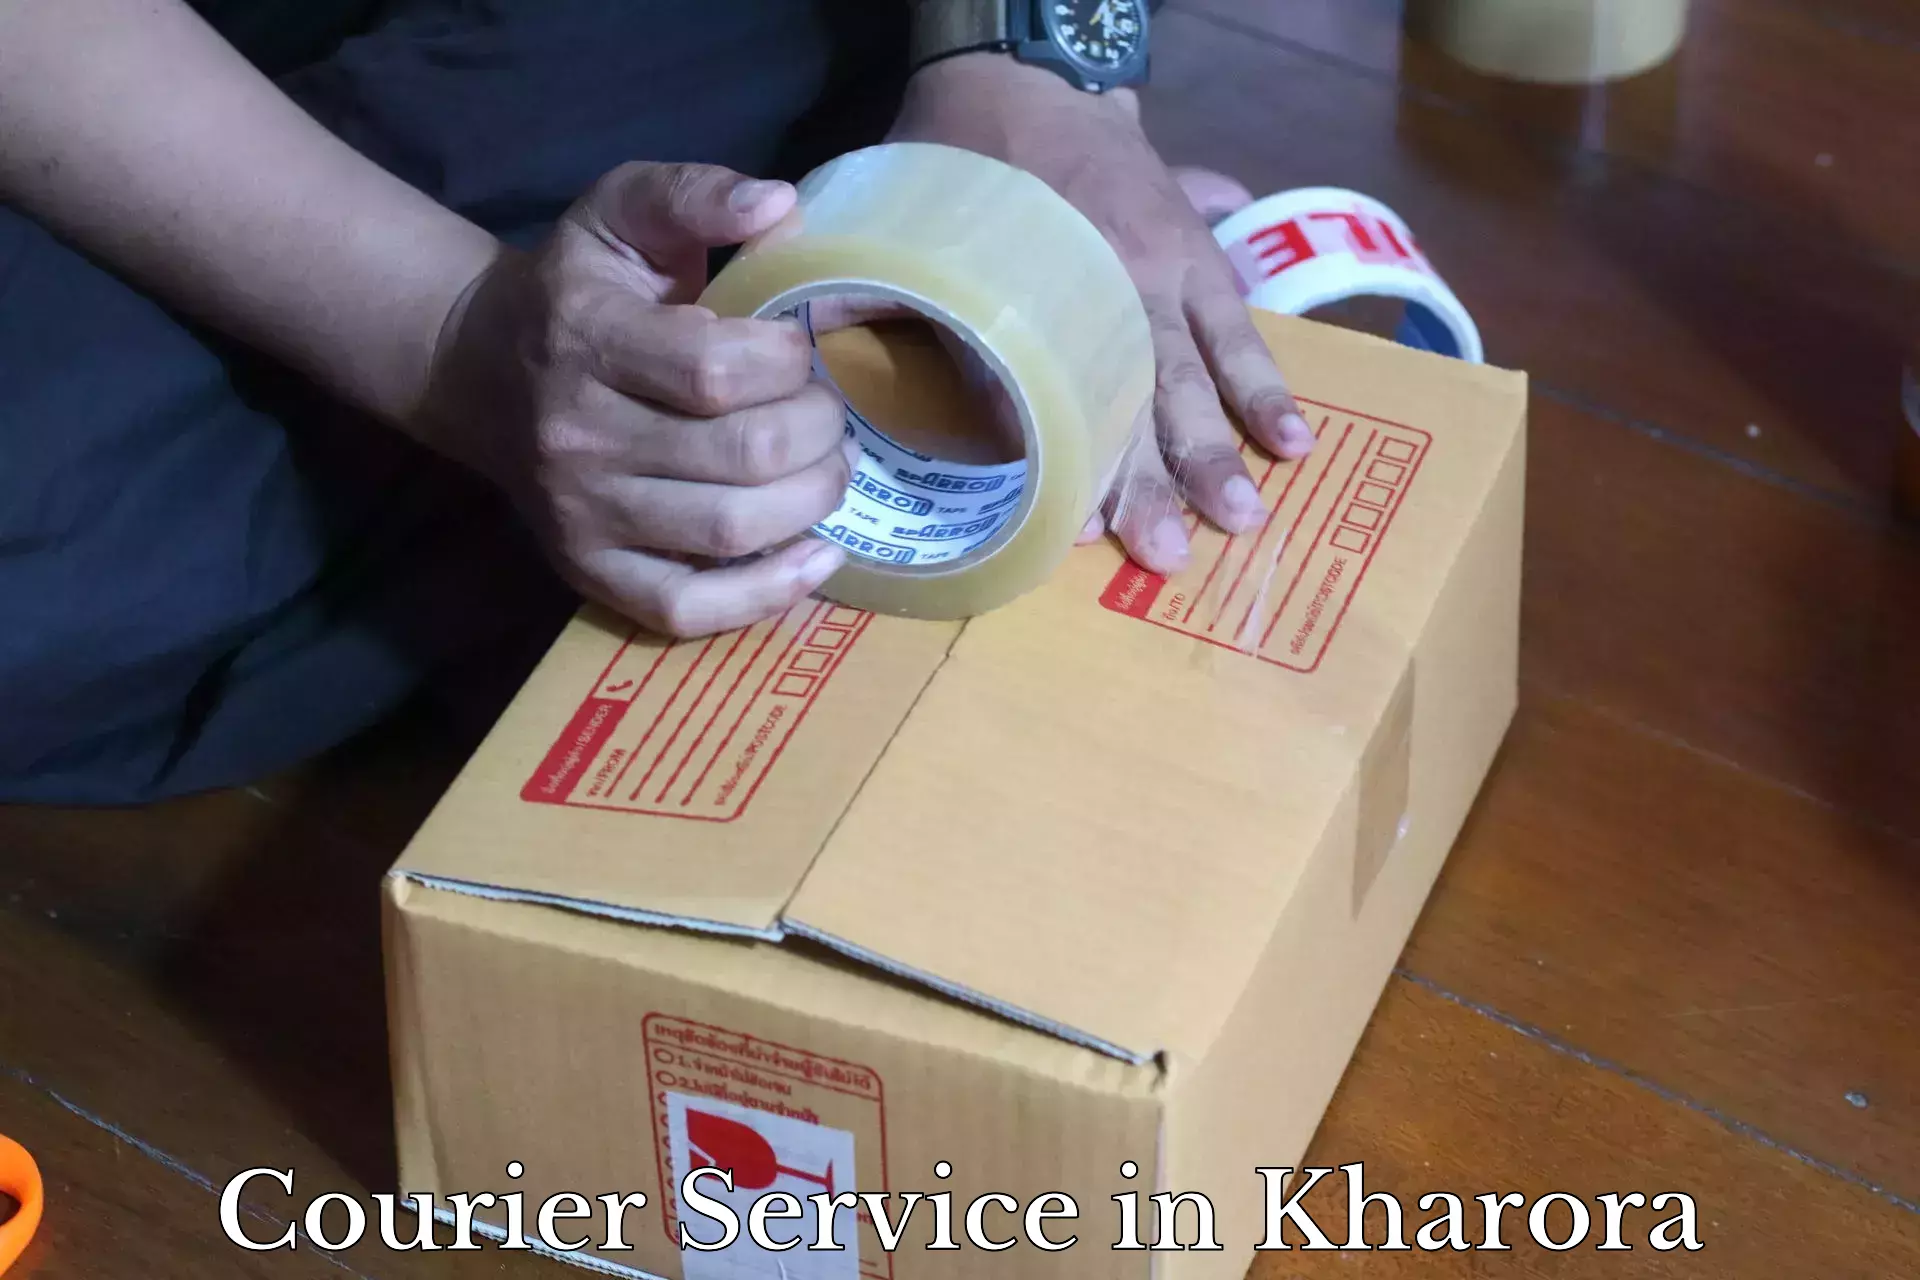 Affordable parcel rates in Kharora